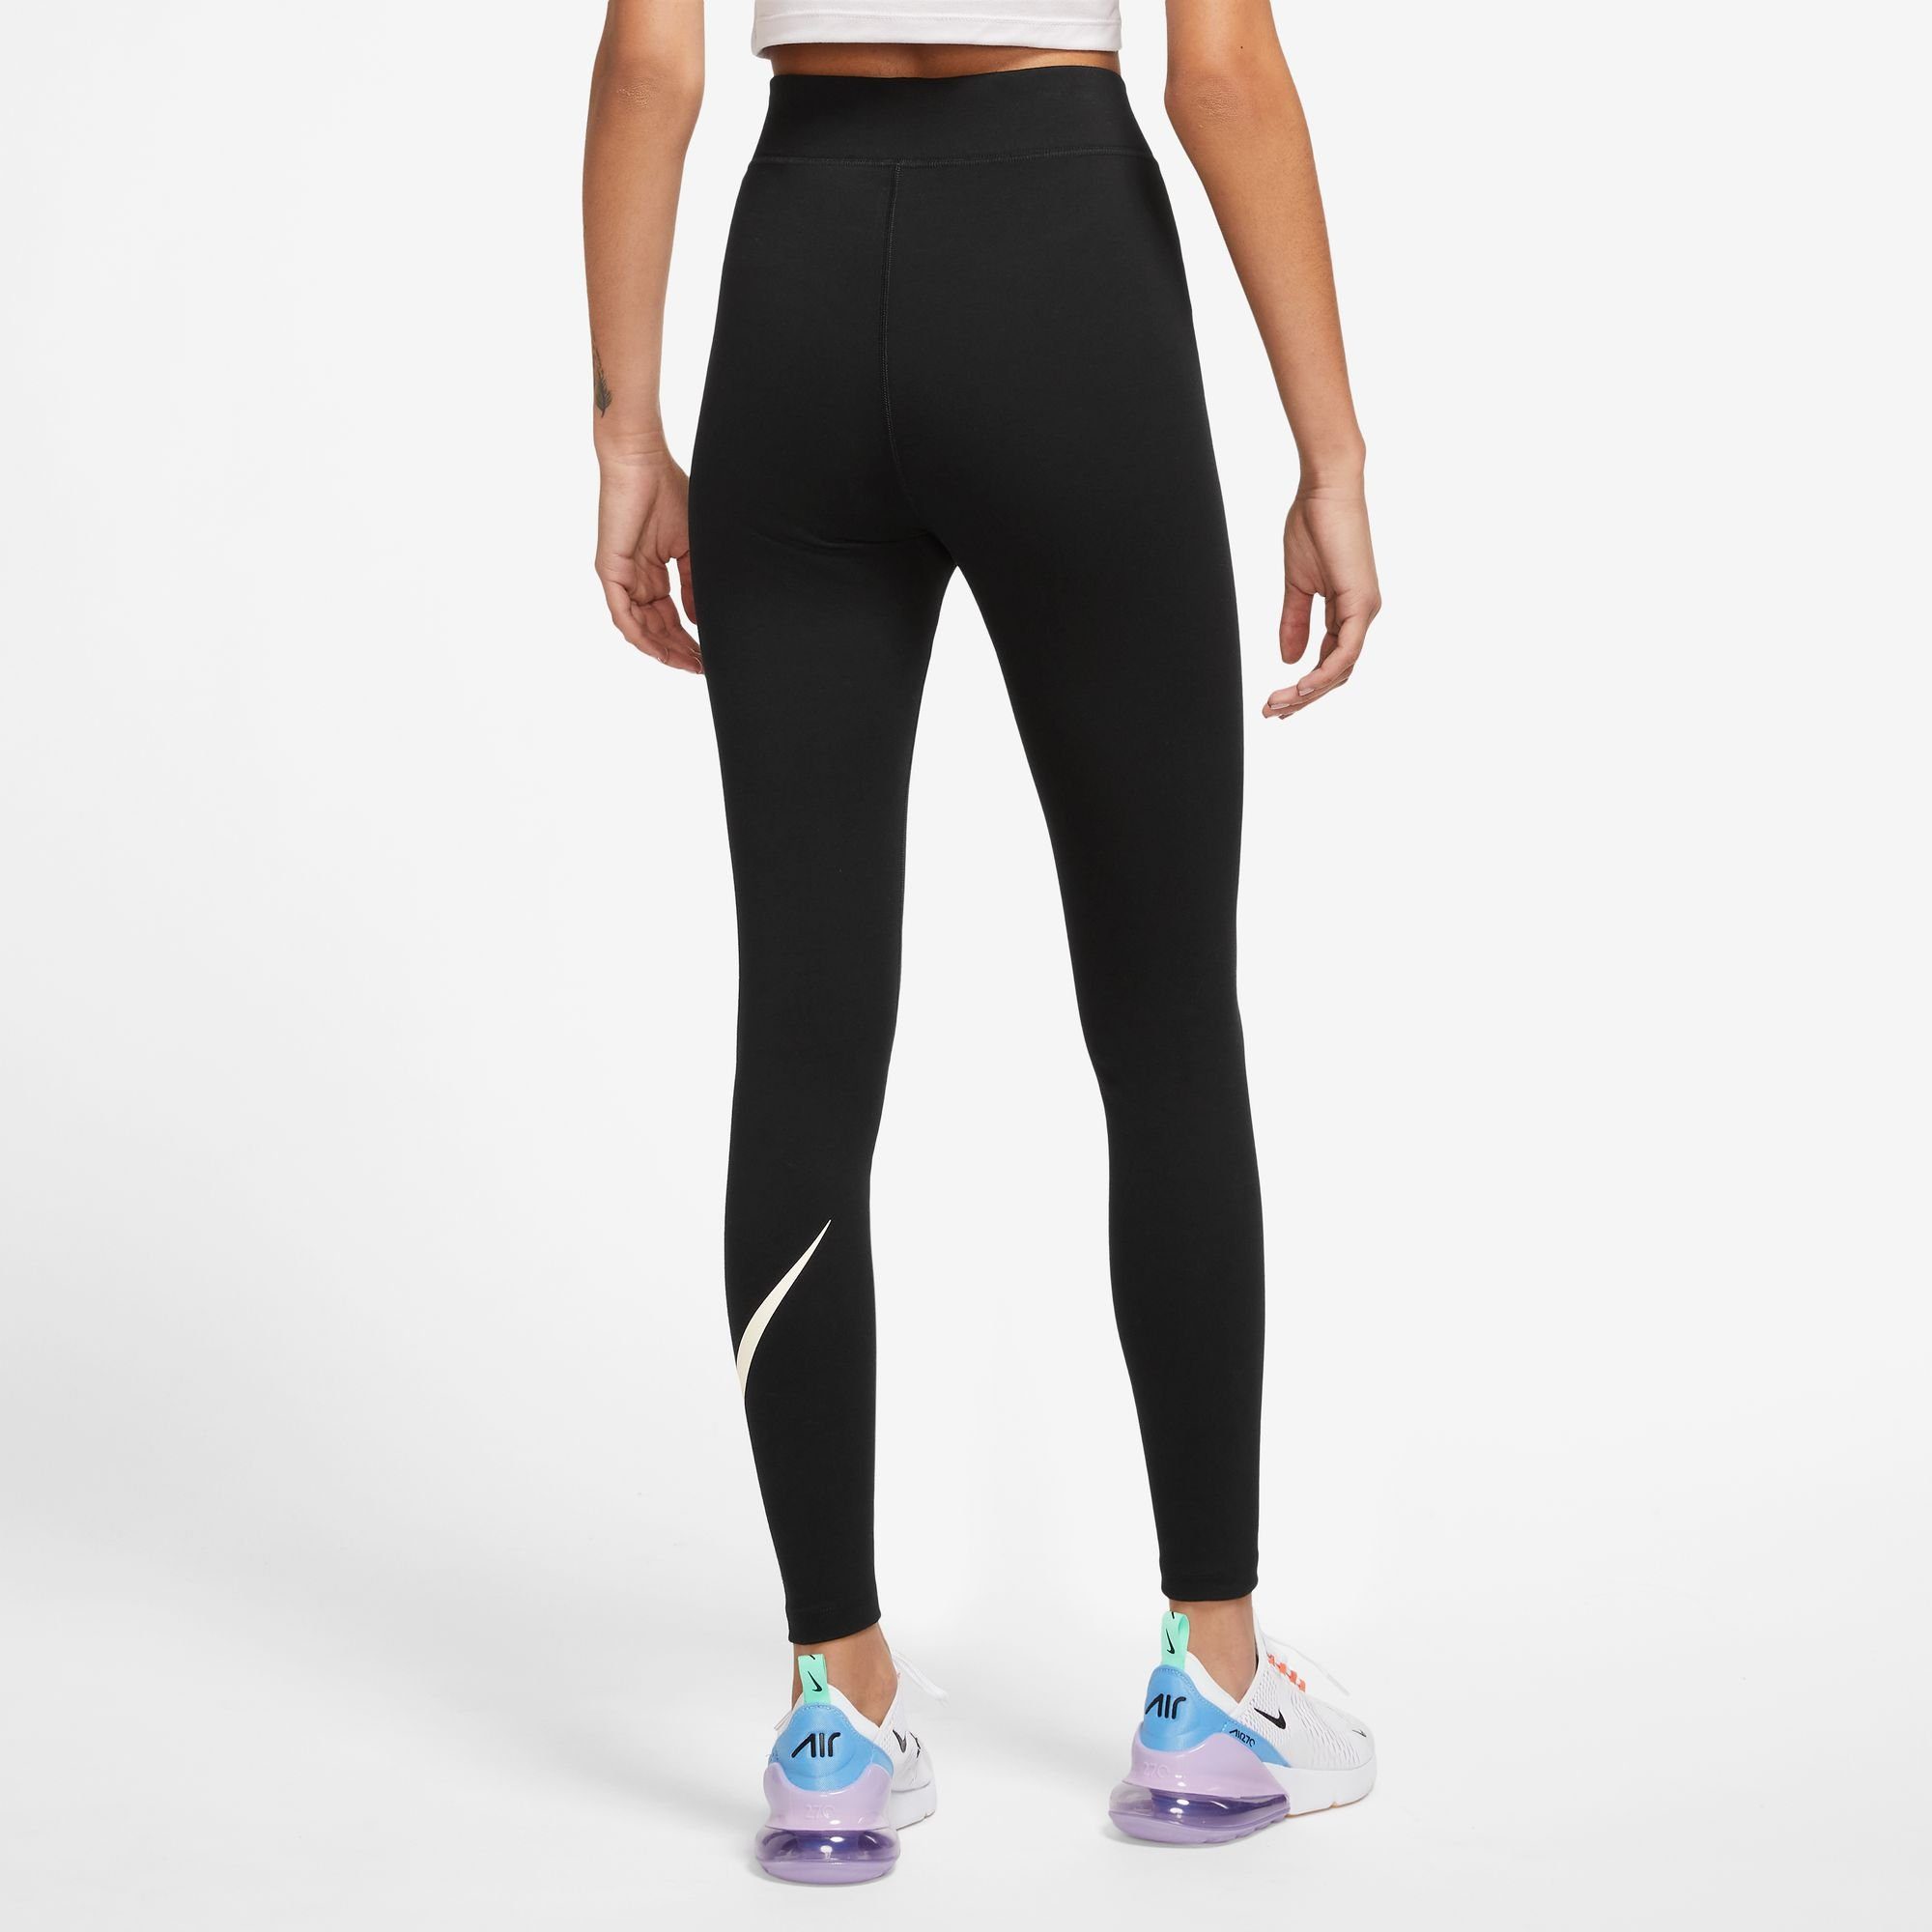 BLACK/SAIL HIGH-WAISTED Sportswear CLASSICS GRAPHIC Nike Leggings WOMEN'S LEGGINGS